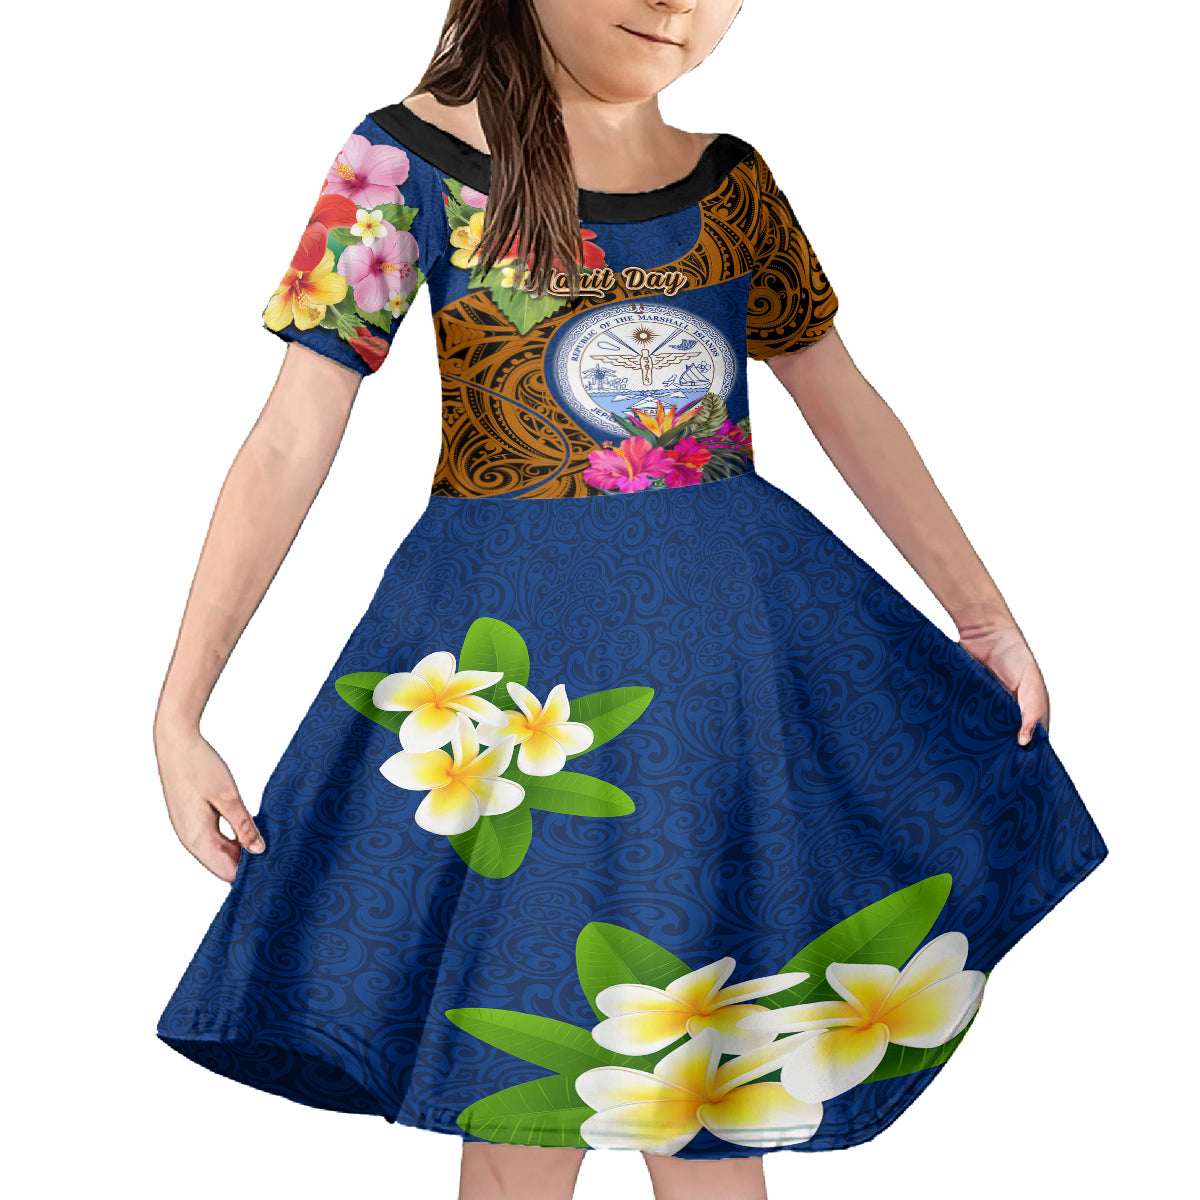 marshall-islands-manit-day-kid-short-sleeve-dress-marshall-seal-mix-hibiscus-flower-maori-pattern-style